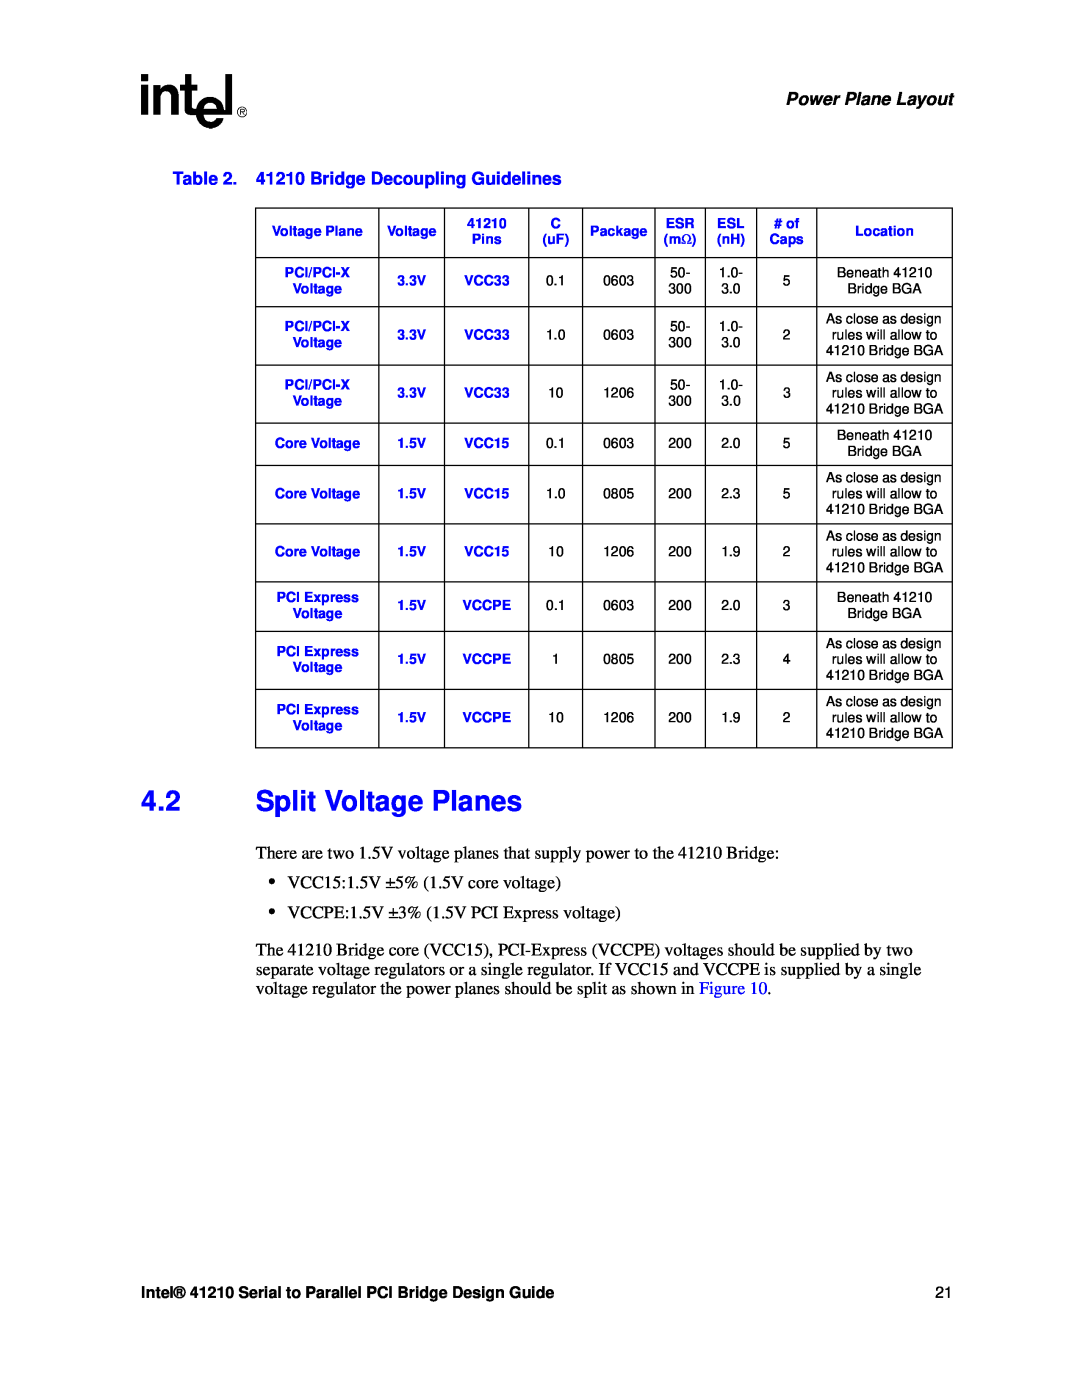 Intel manual Split Voltage Planes, 41210 Bridge Decoupling Guidelines, Power Plane Layout 